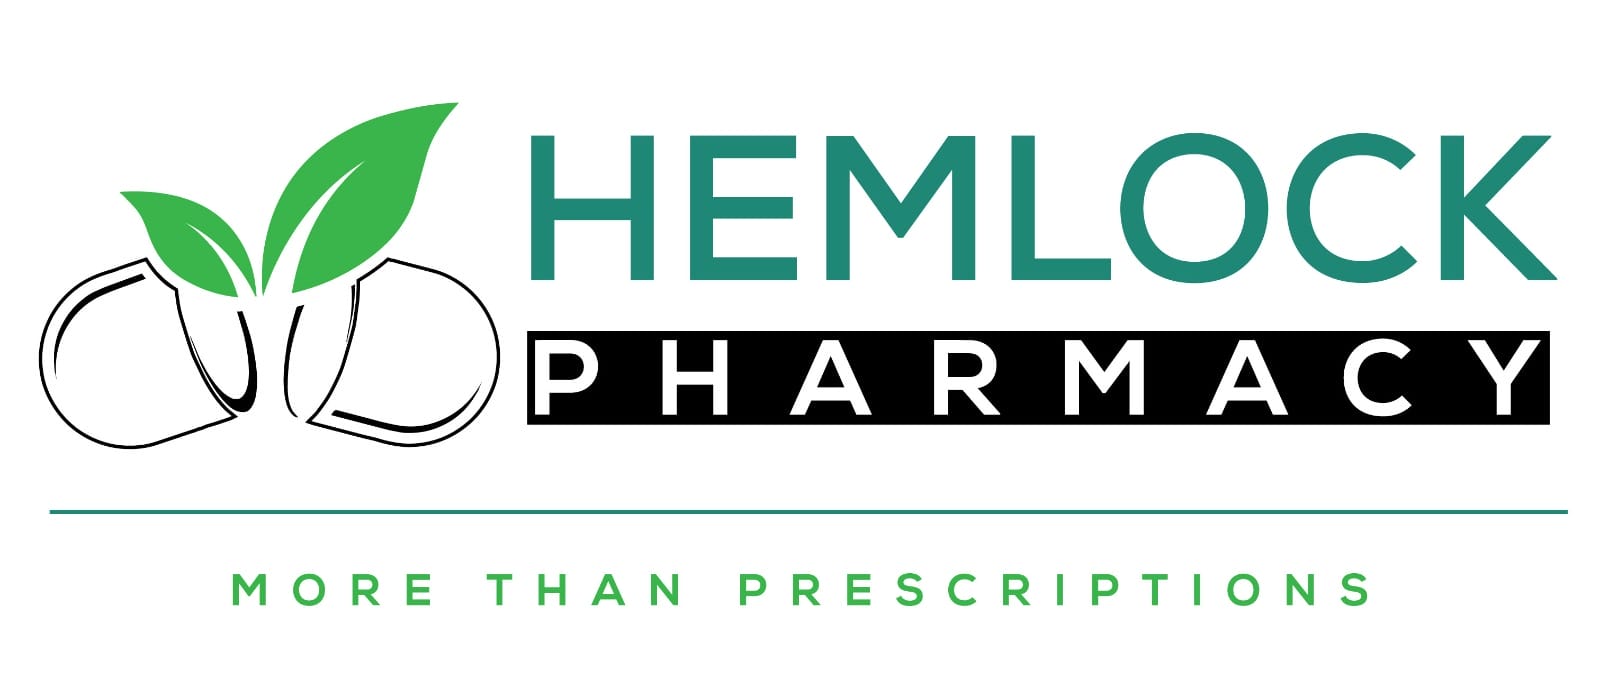 Hemlock Pharmacy Logo